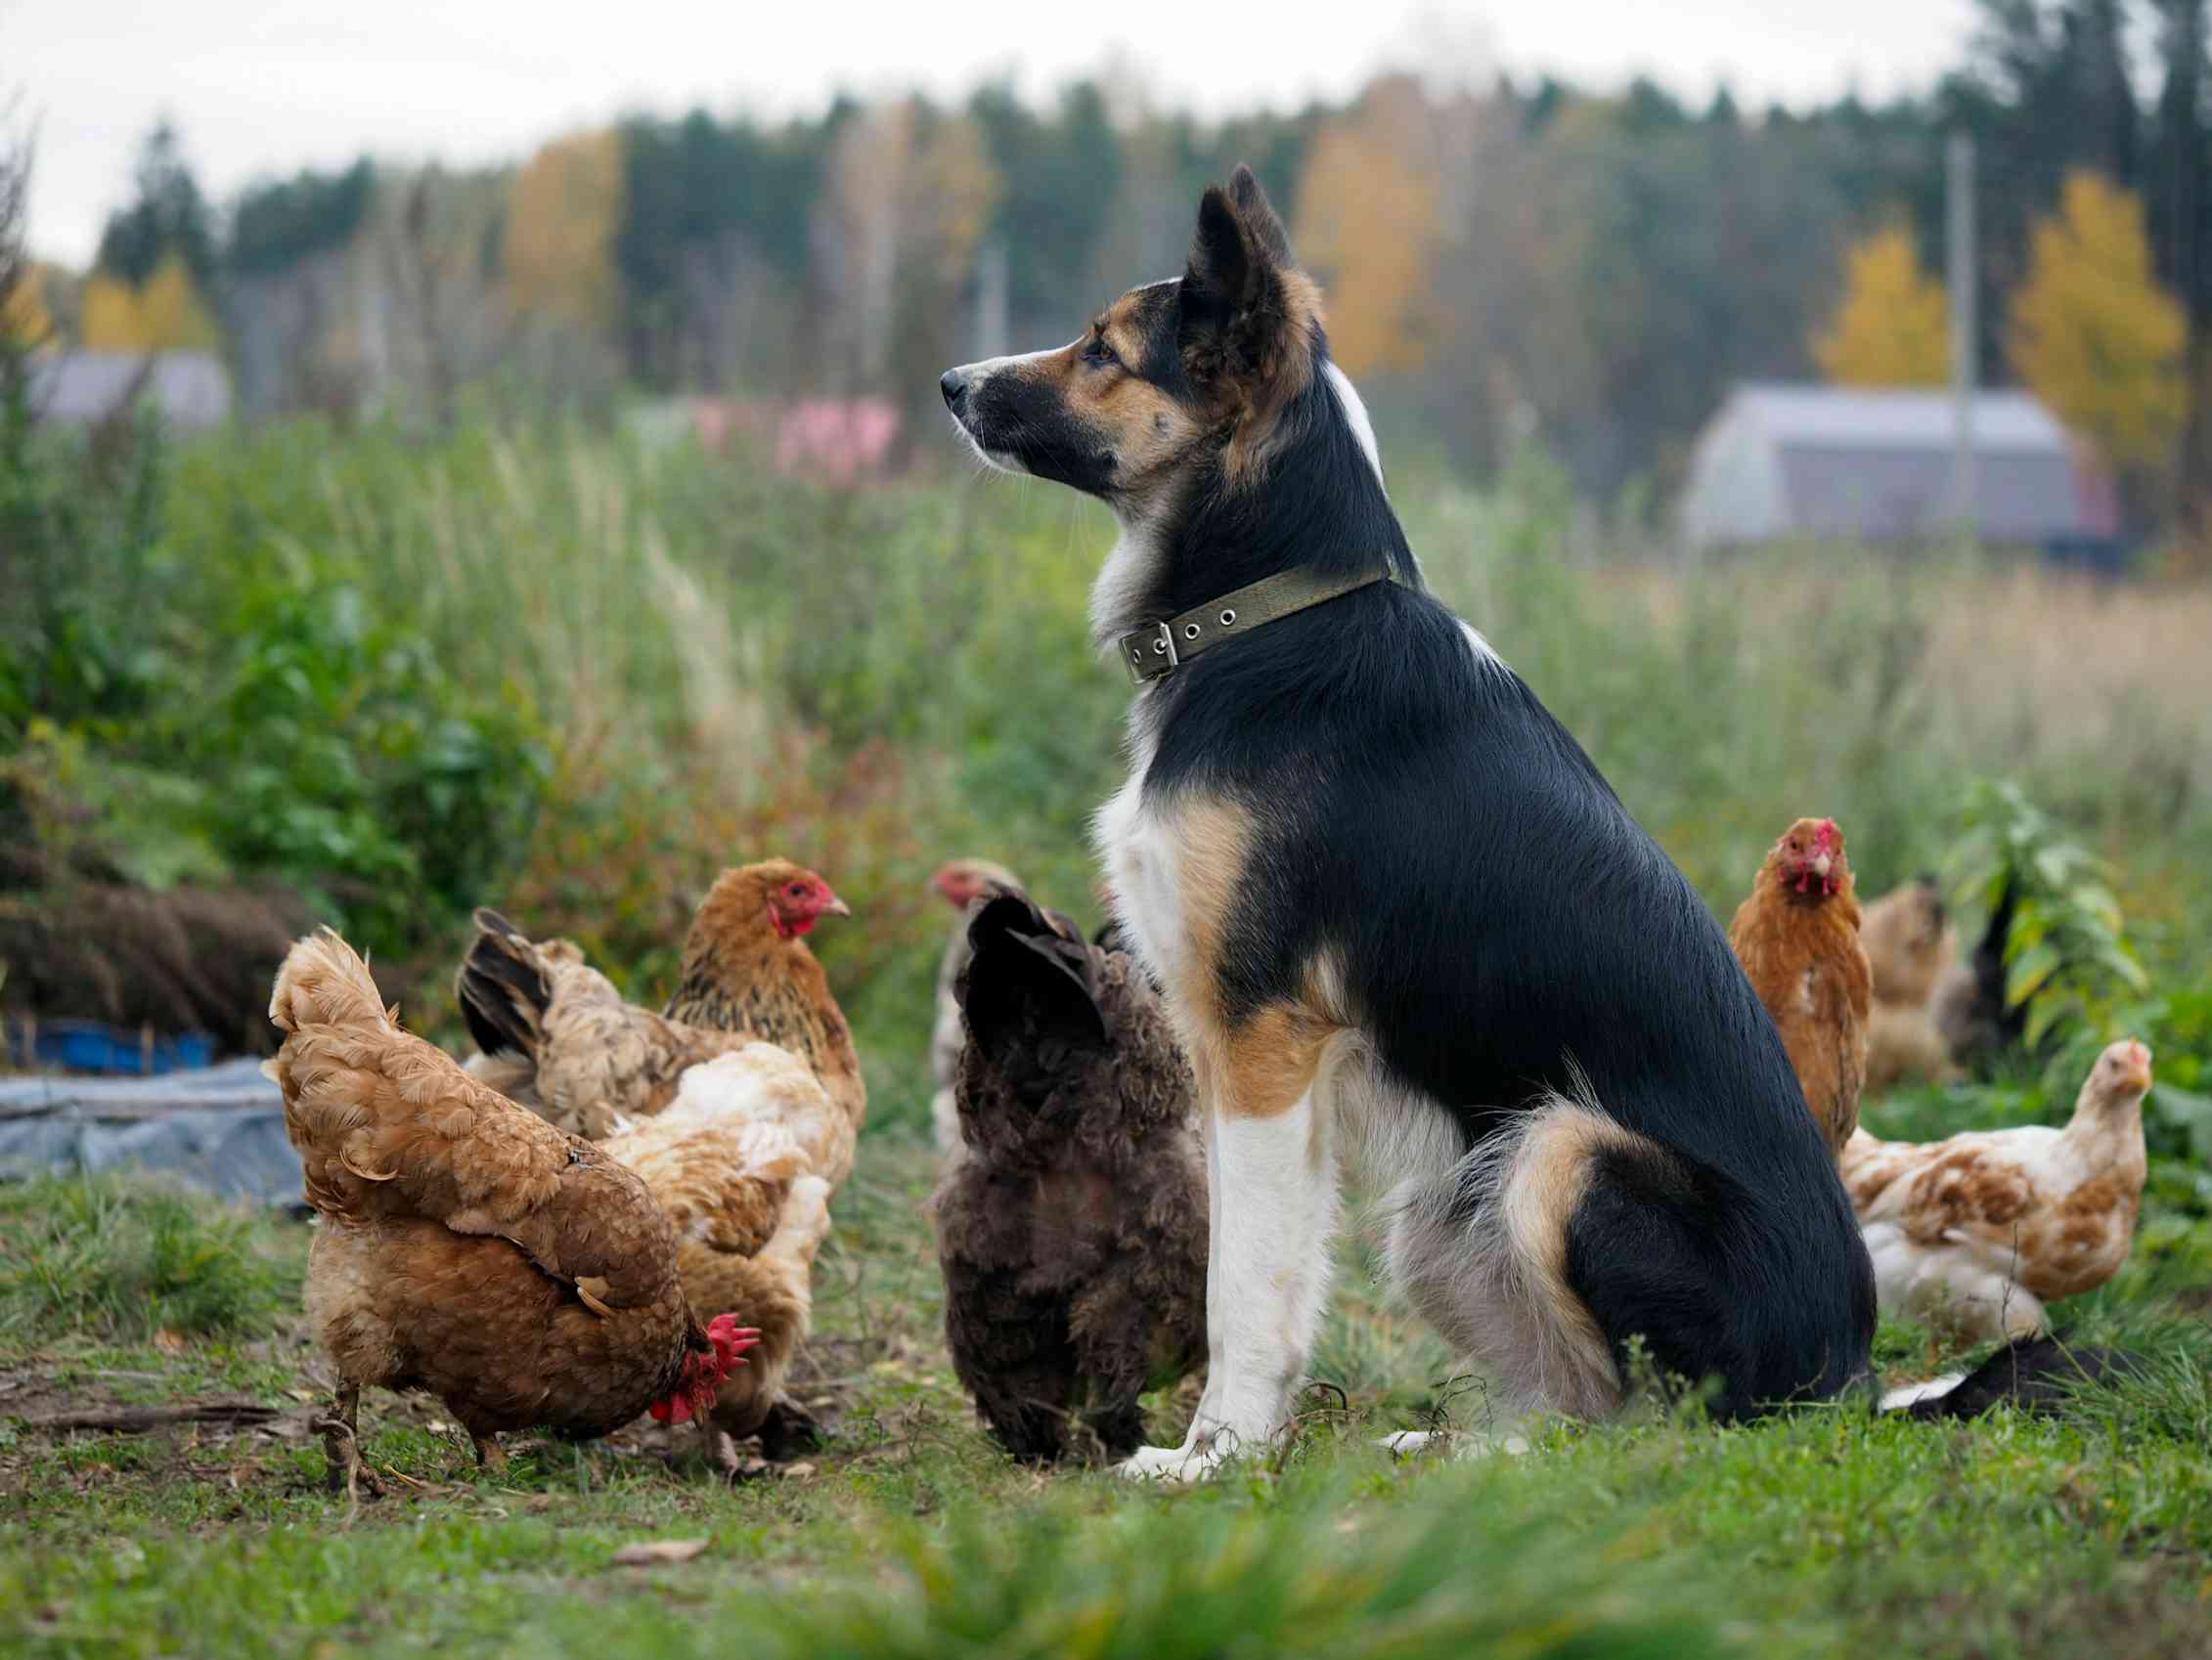 Dog sits among chickens